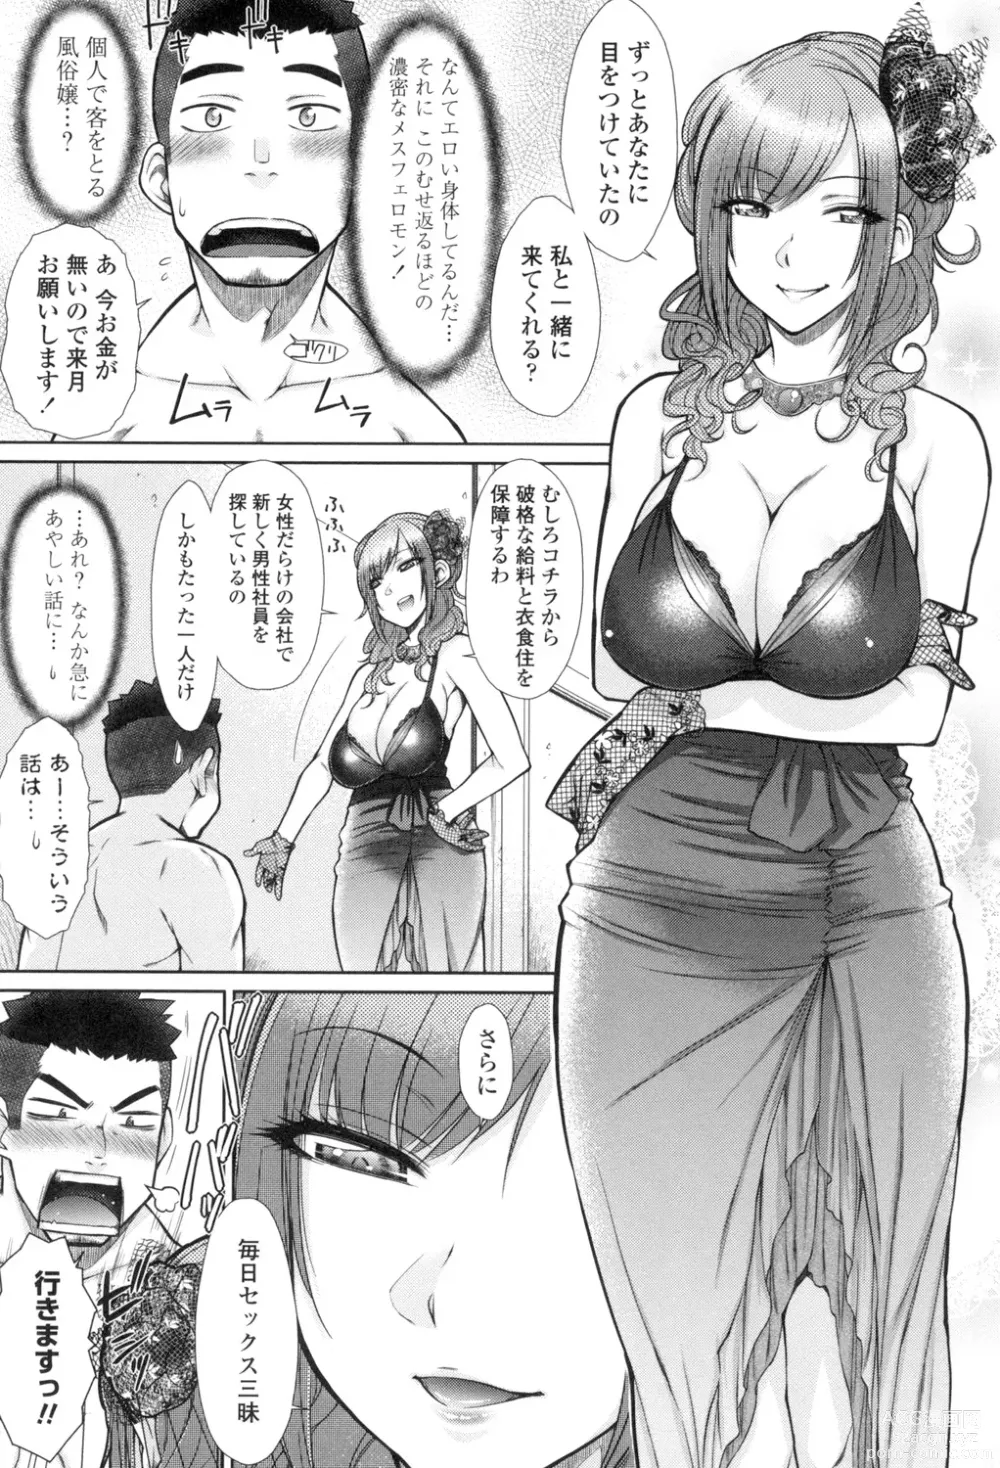 Page 6 of manga Kochira Joshi Shain Senyou Seishorika - Sex Industry Division for Womens Employees Dedicated